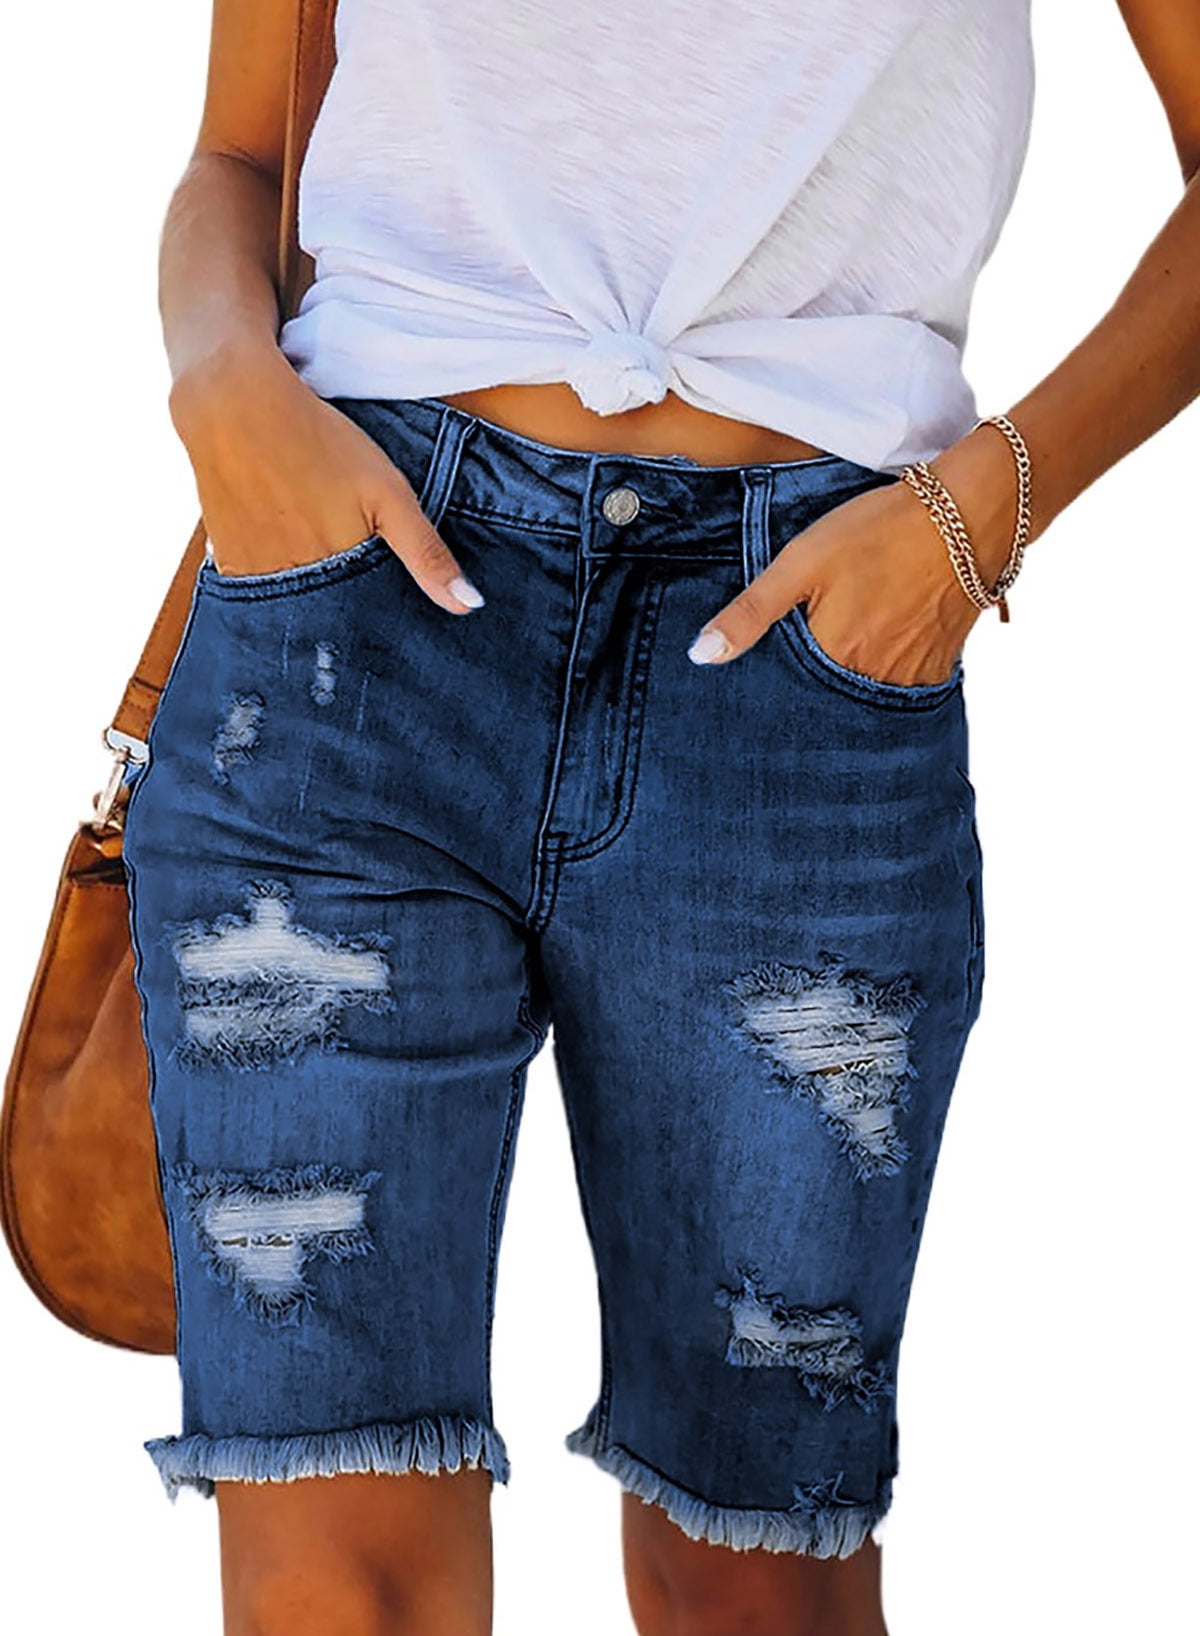 The Bermuda Knee Length Denim Shorts Trend | The Jeans Blog | Knee length  denim shorts, Short outfits, Denim bermuda shorts outfit